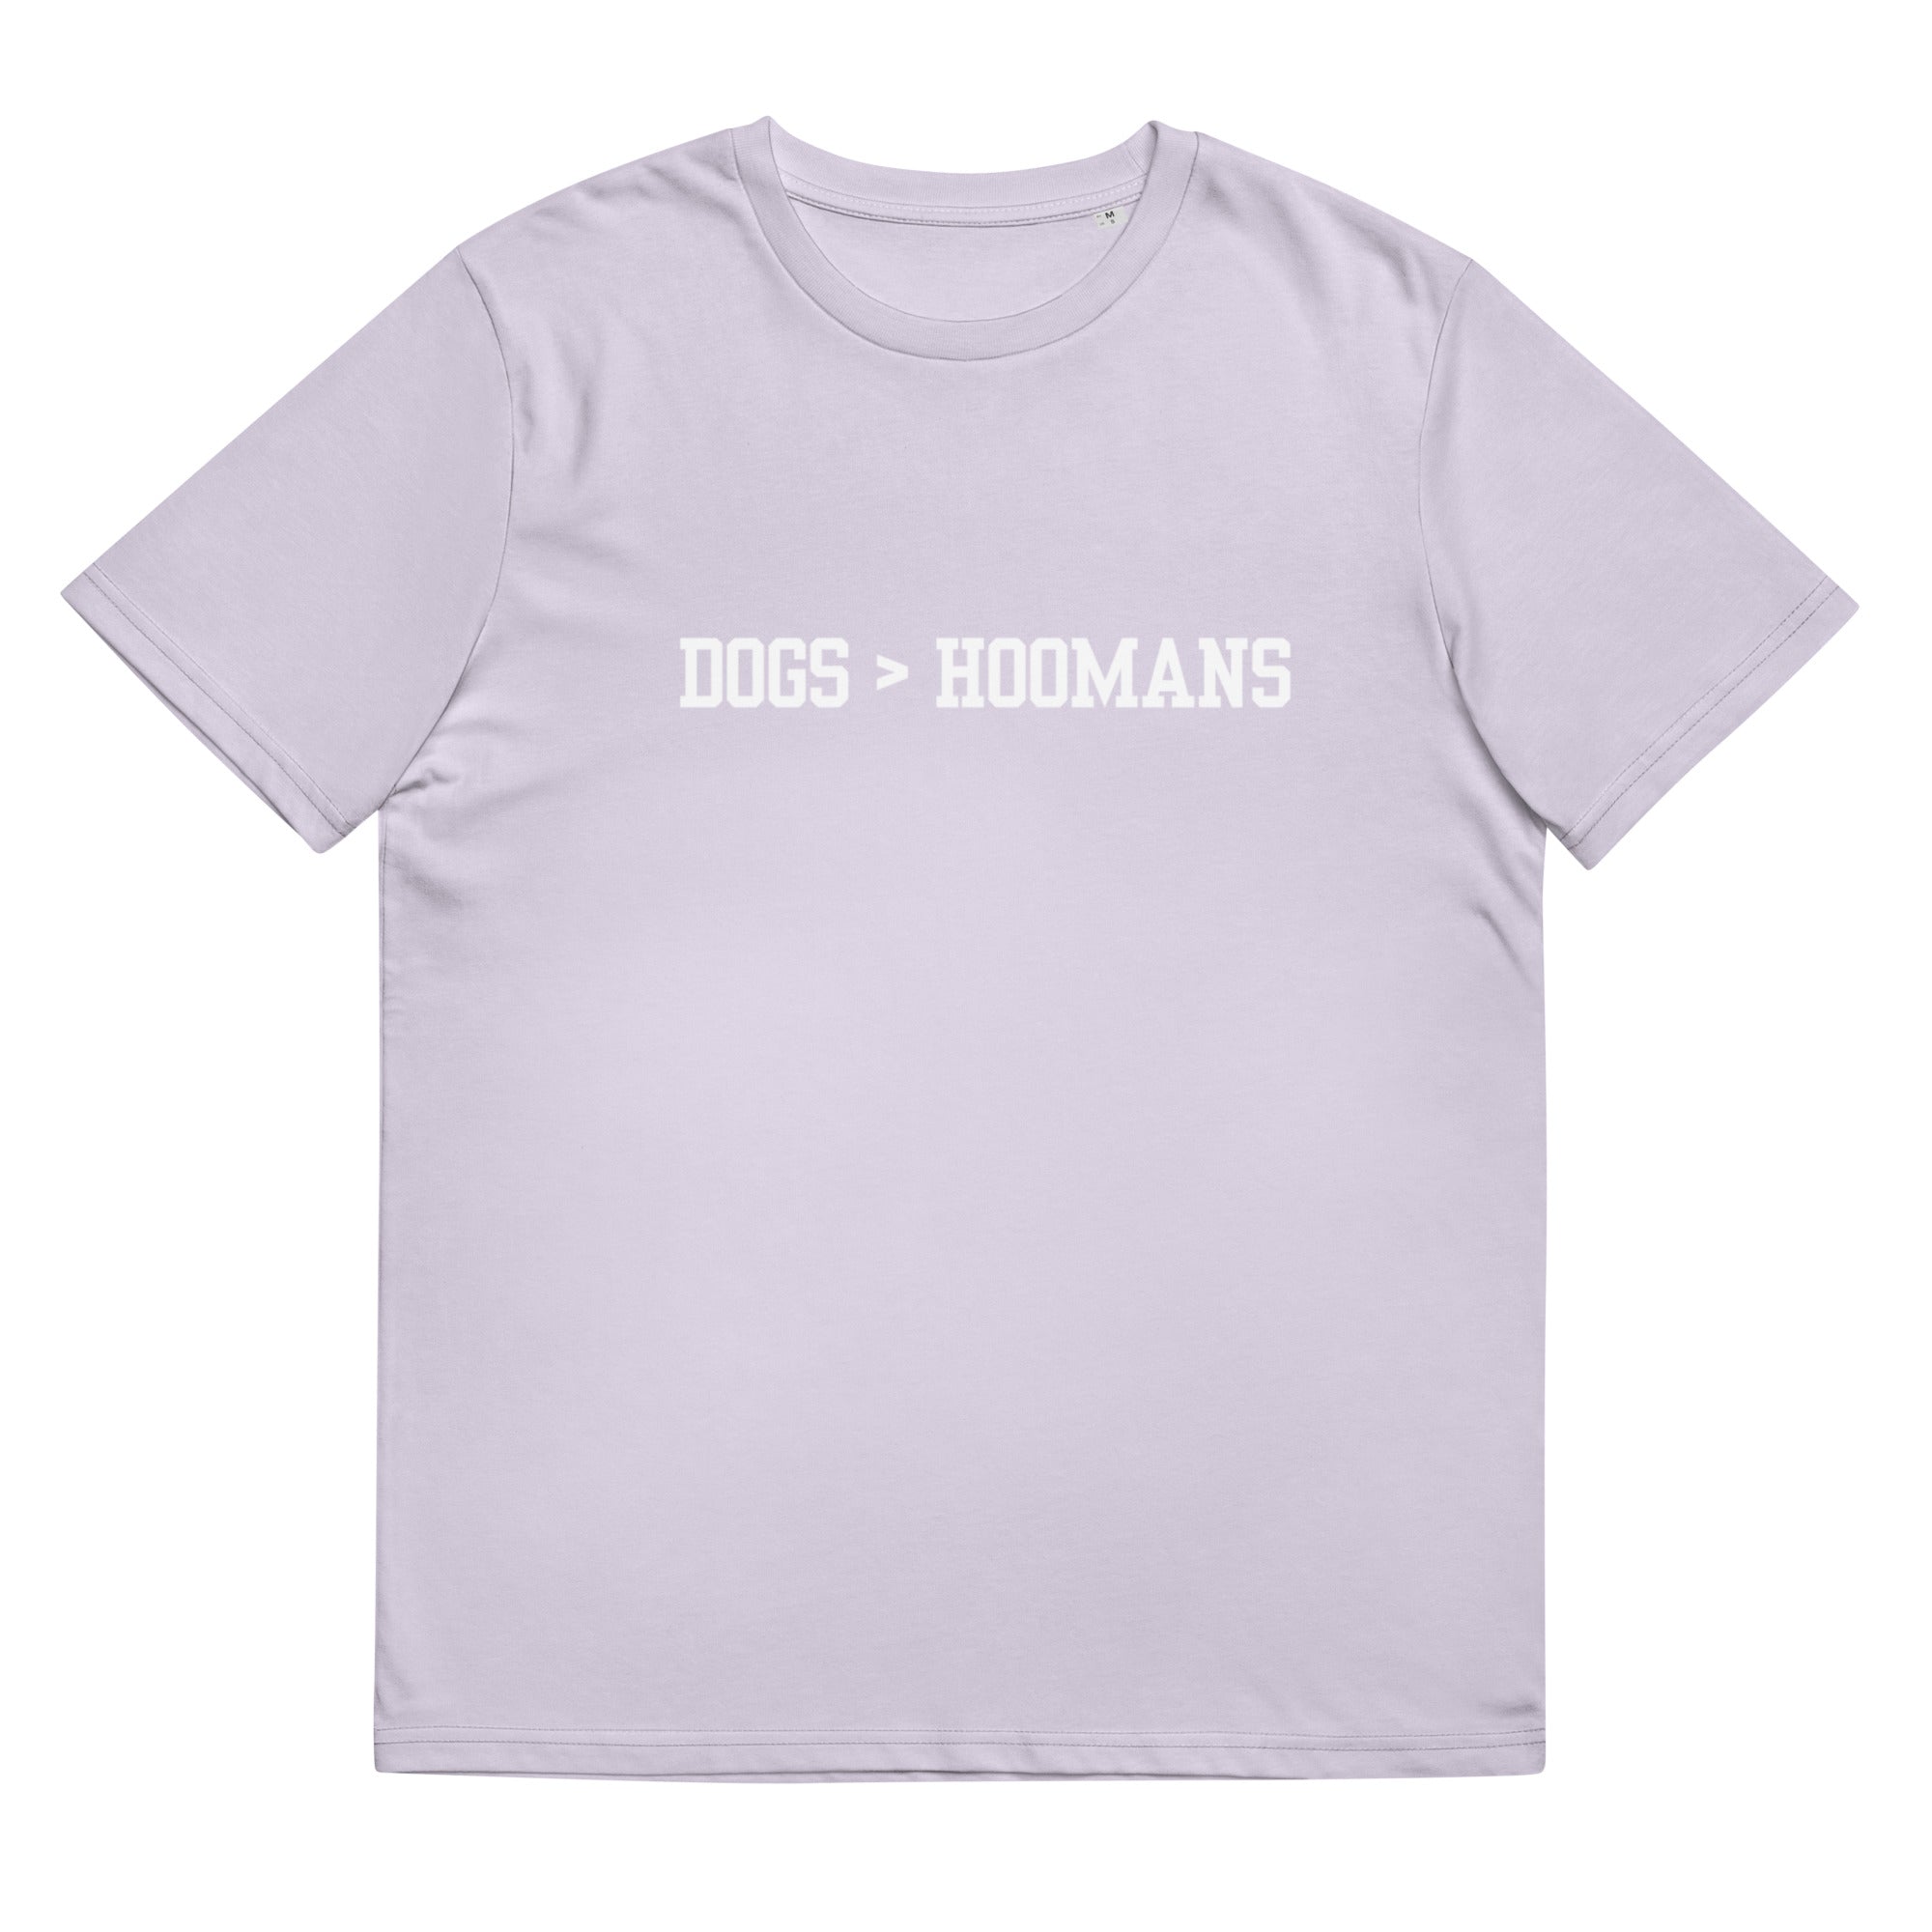 Dogs > Hoomans (Humans) Unisex Organic Cotton T-shirt